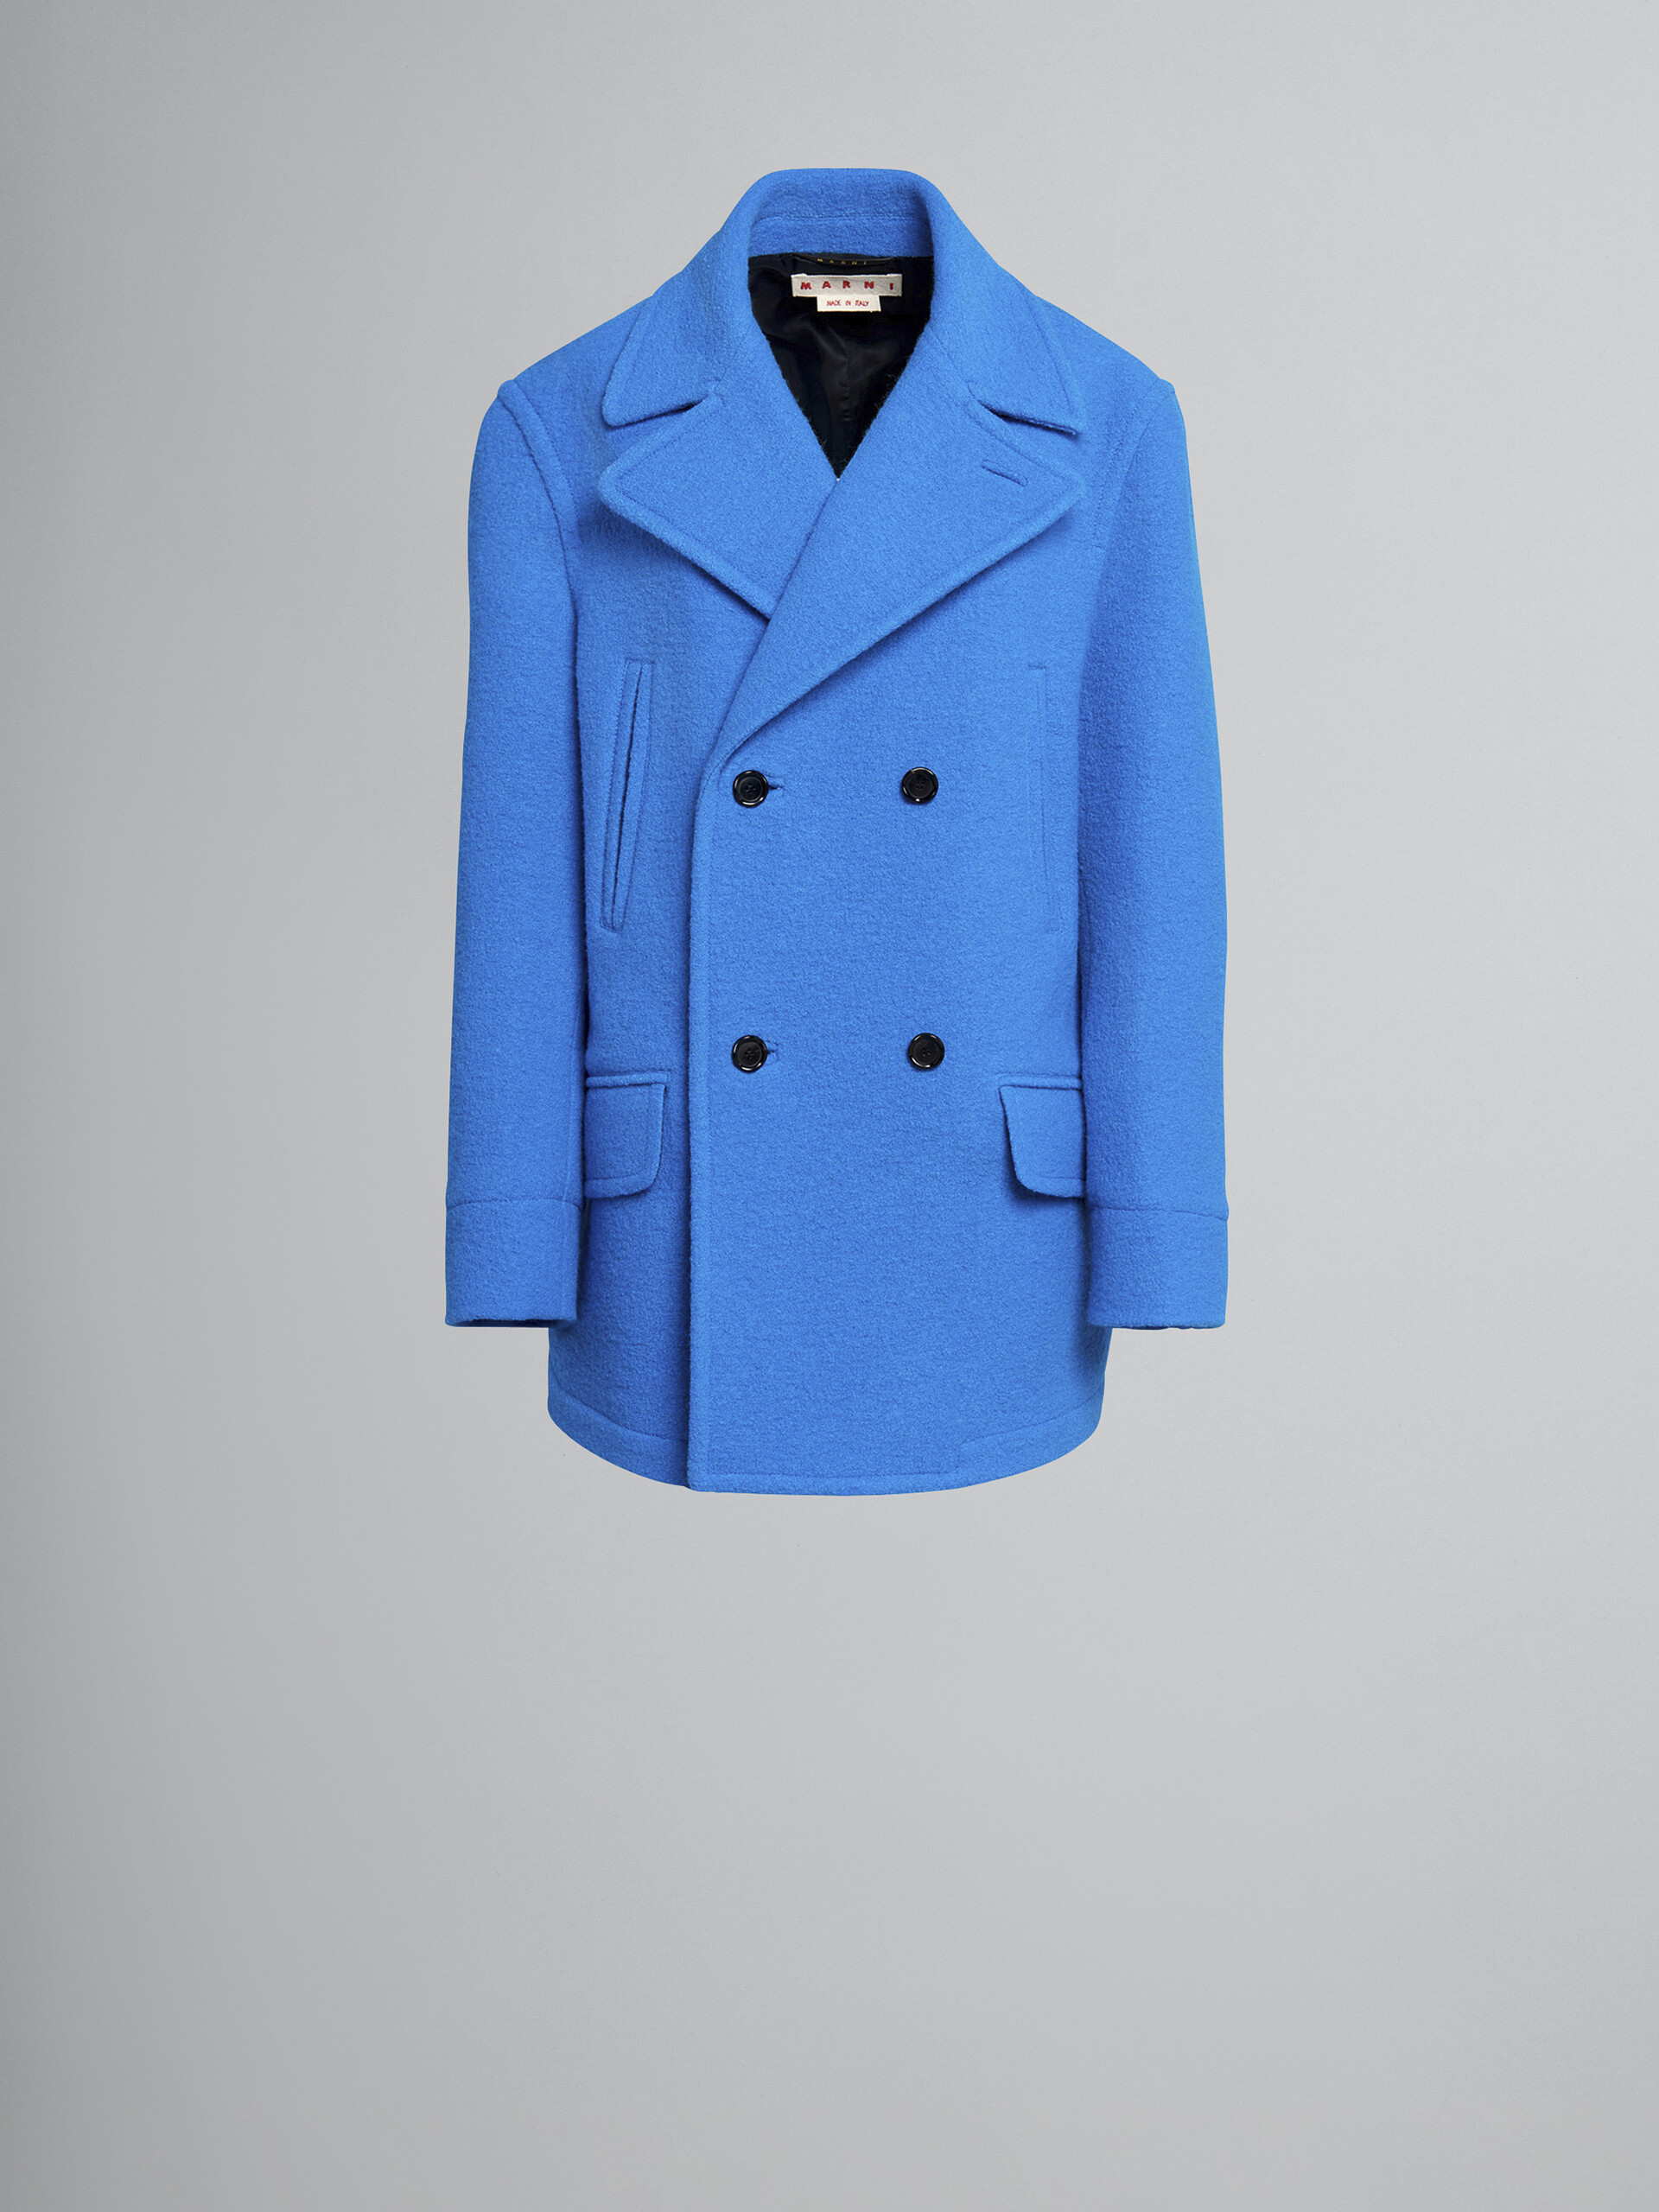 Blue bouclé wool peacoat - Coats - Image 1